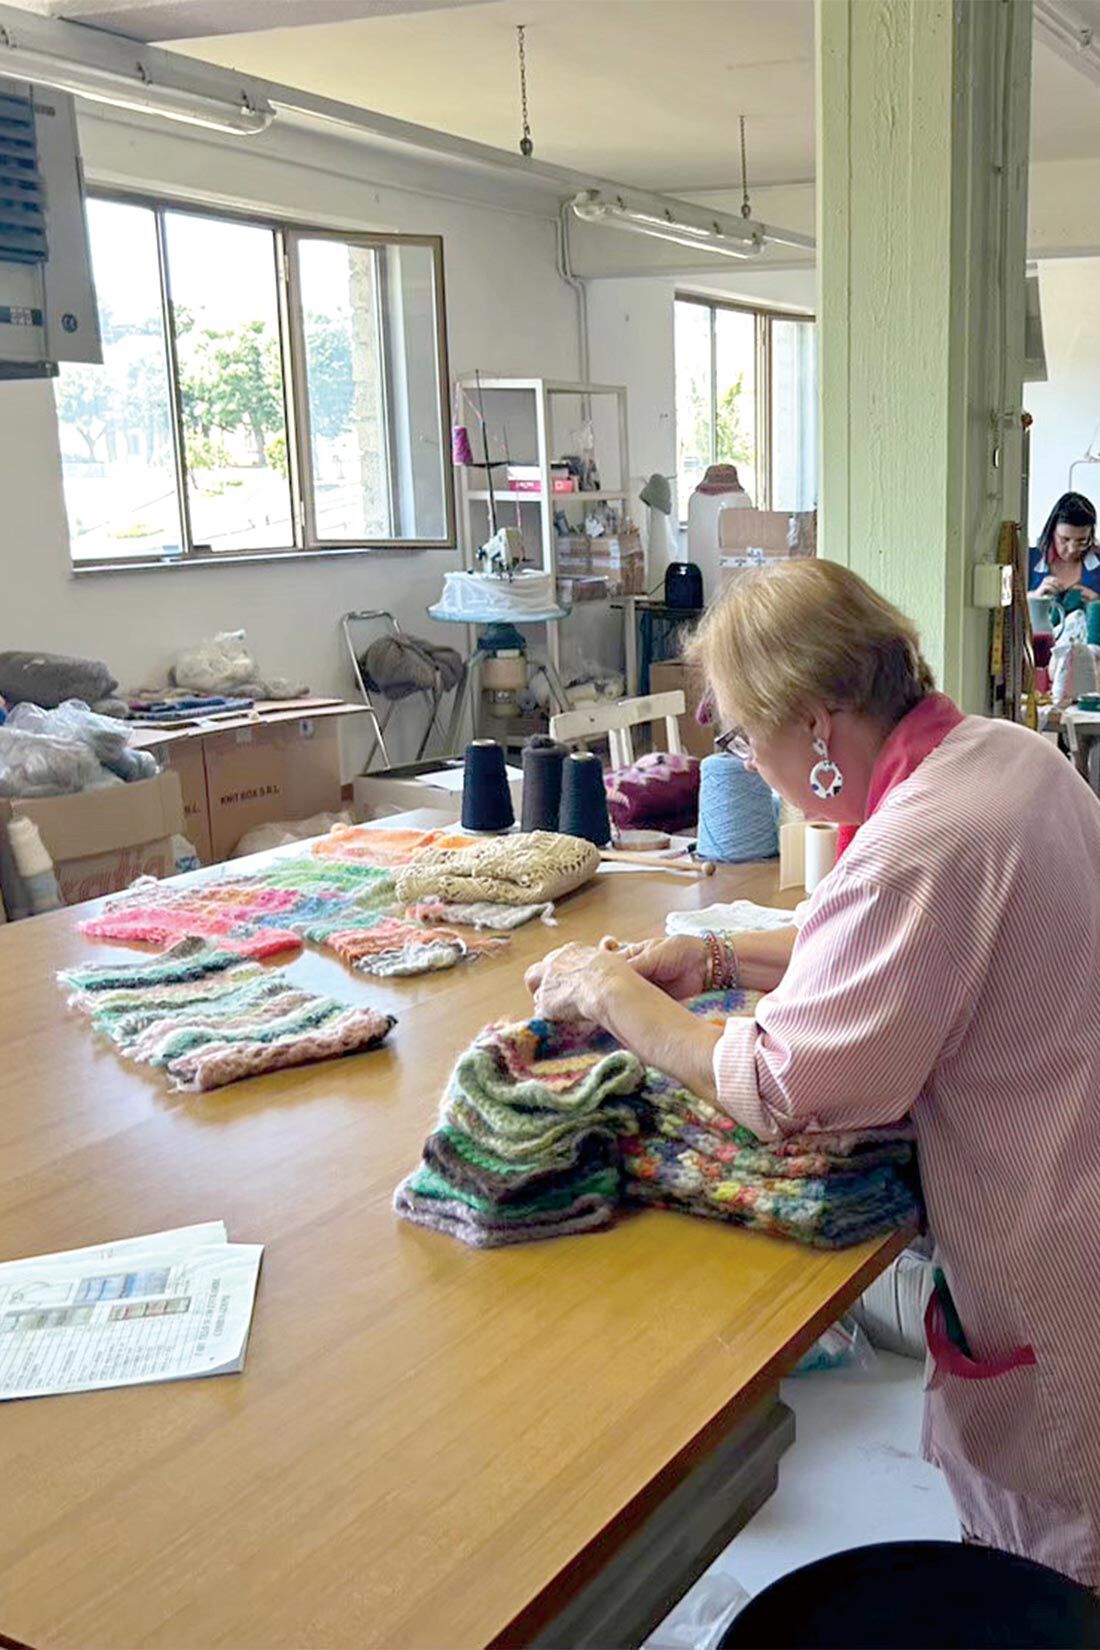 MEDE19F|MEDE19F　イタリアのおばあちゃんが編んでる工房で編みたてたウールのニットカーディガン〈オフホワイト〉|村の編み物を取り仕切る工房「チェッコーニ」。高齢の女性が中心だが、若い世代にも編み物の技は伝承されています。